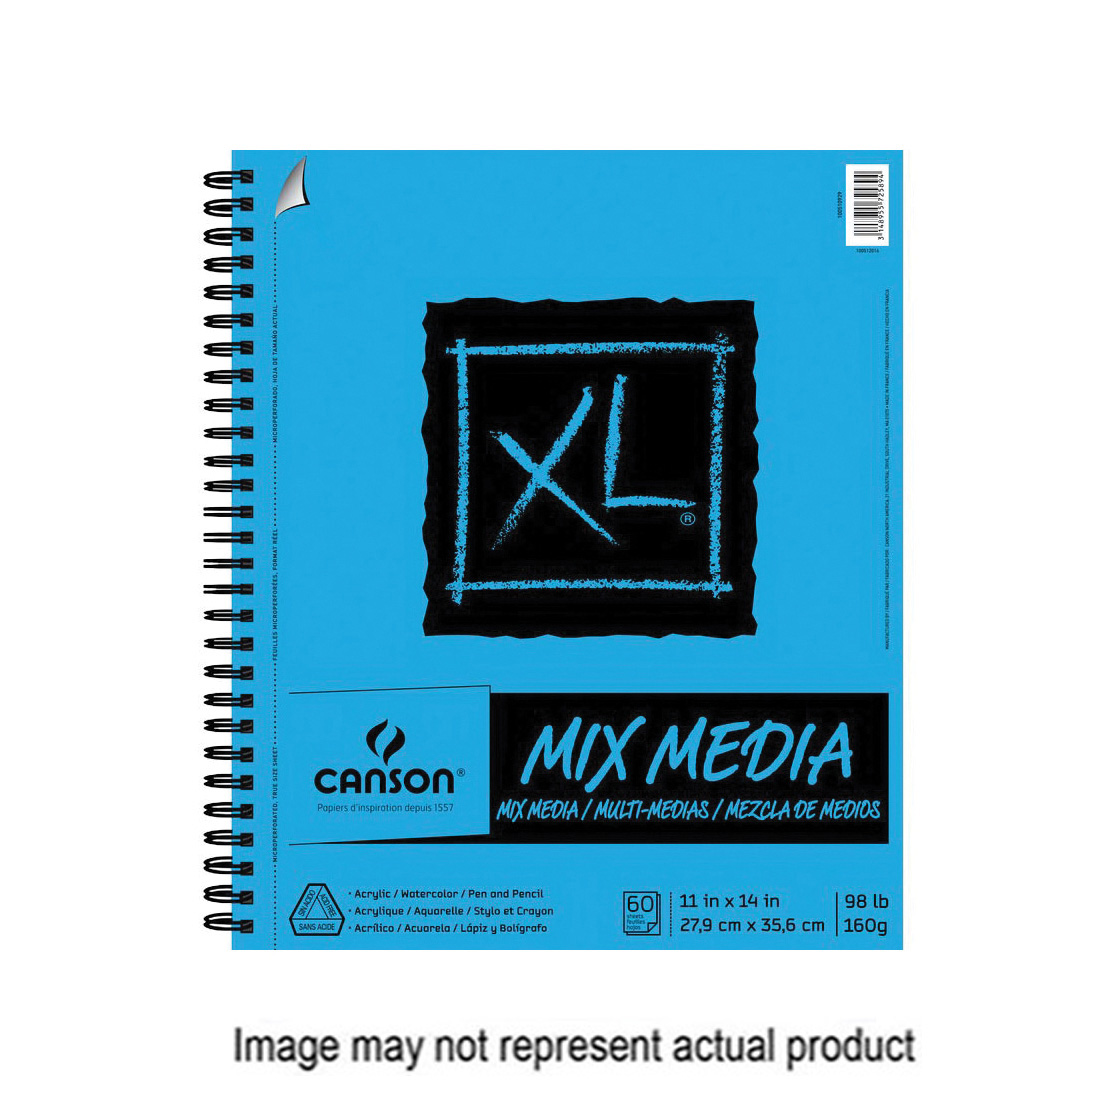 Canson XL 702-2420 Mix Media Pad, 60-Sheet - 1